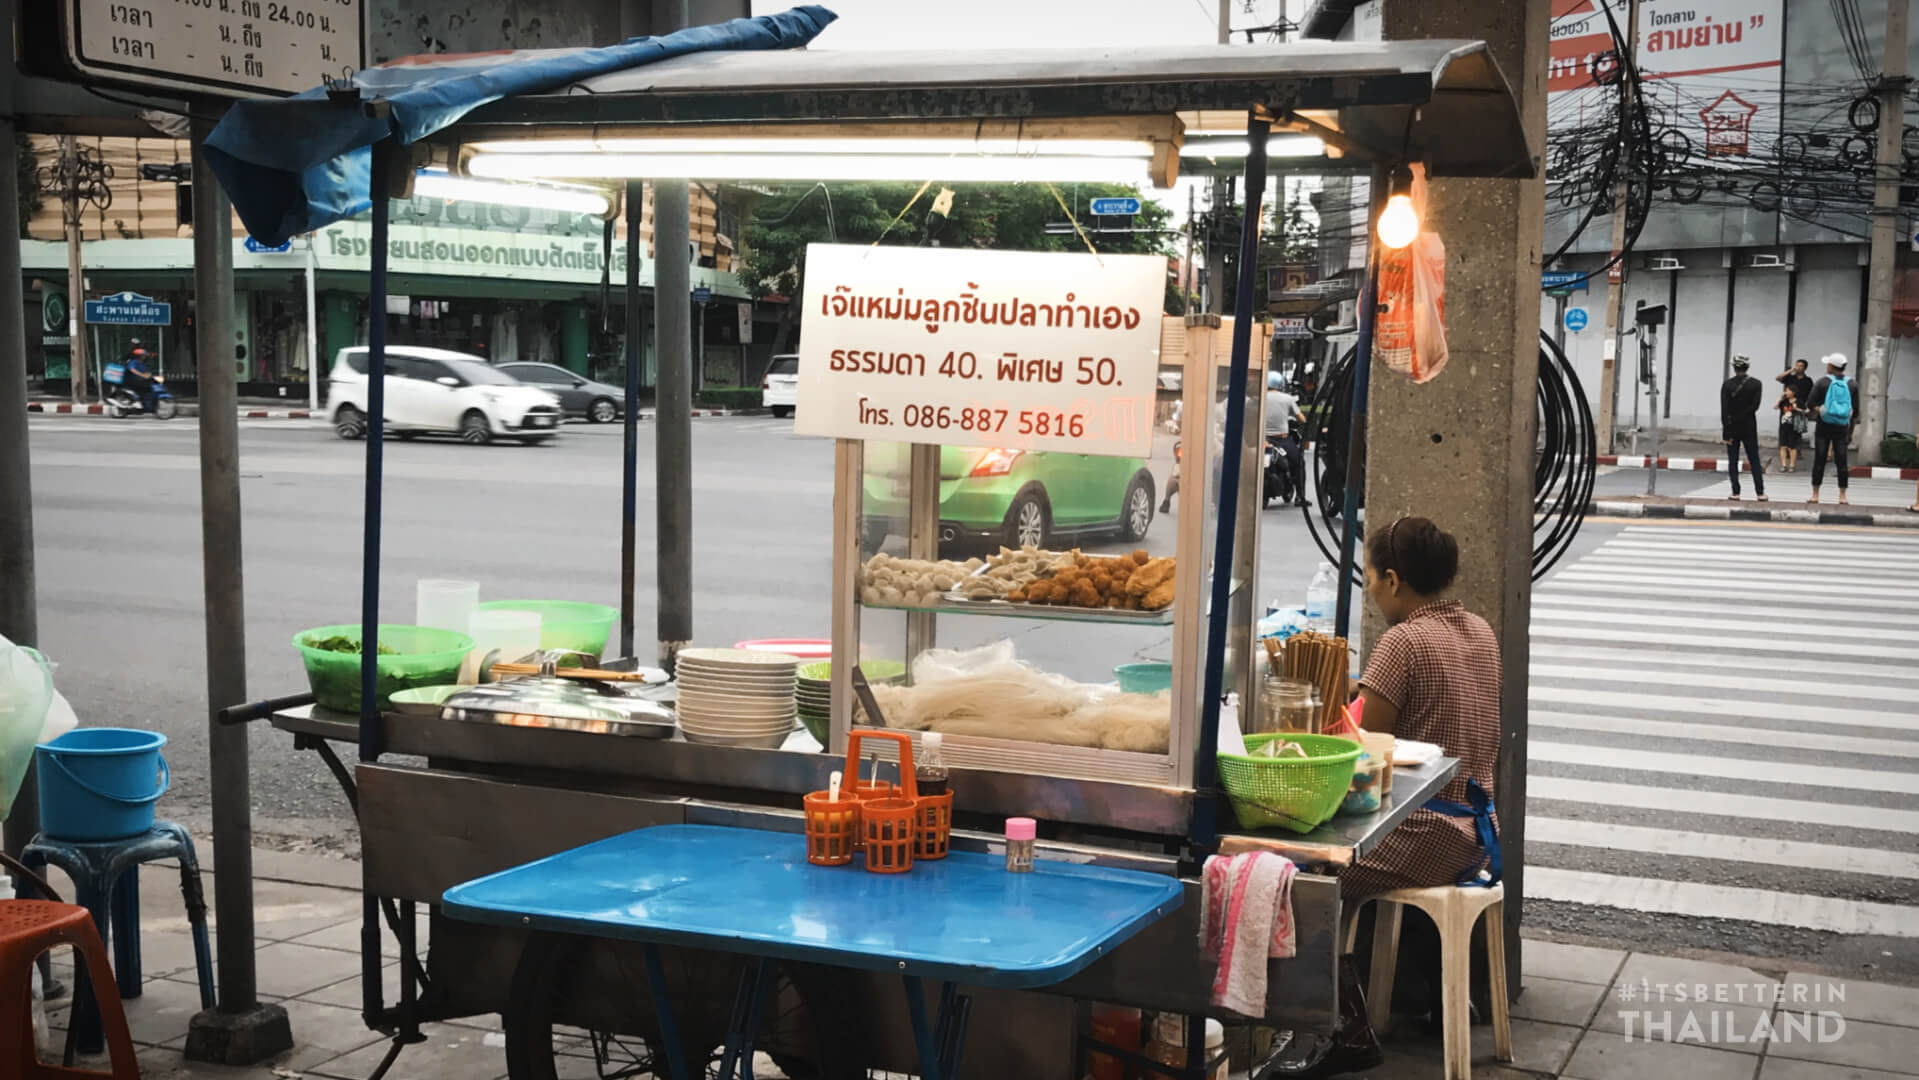 Thailand noodle shop street food